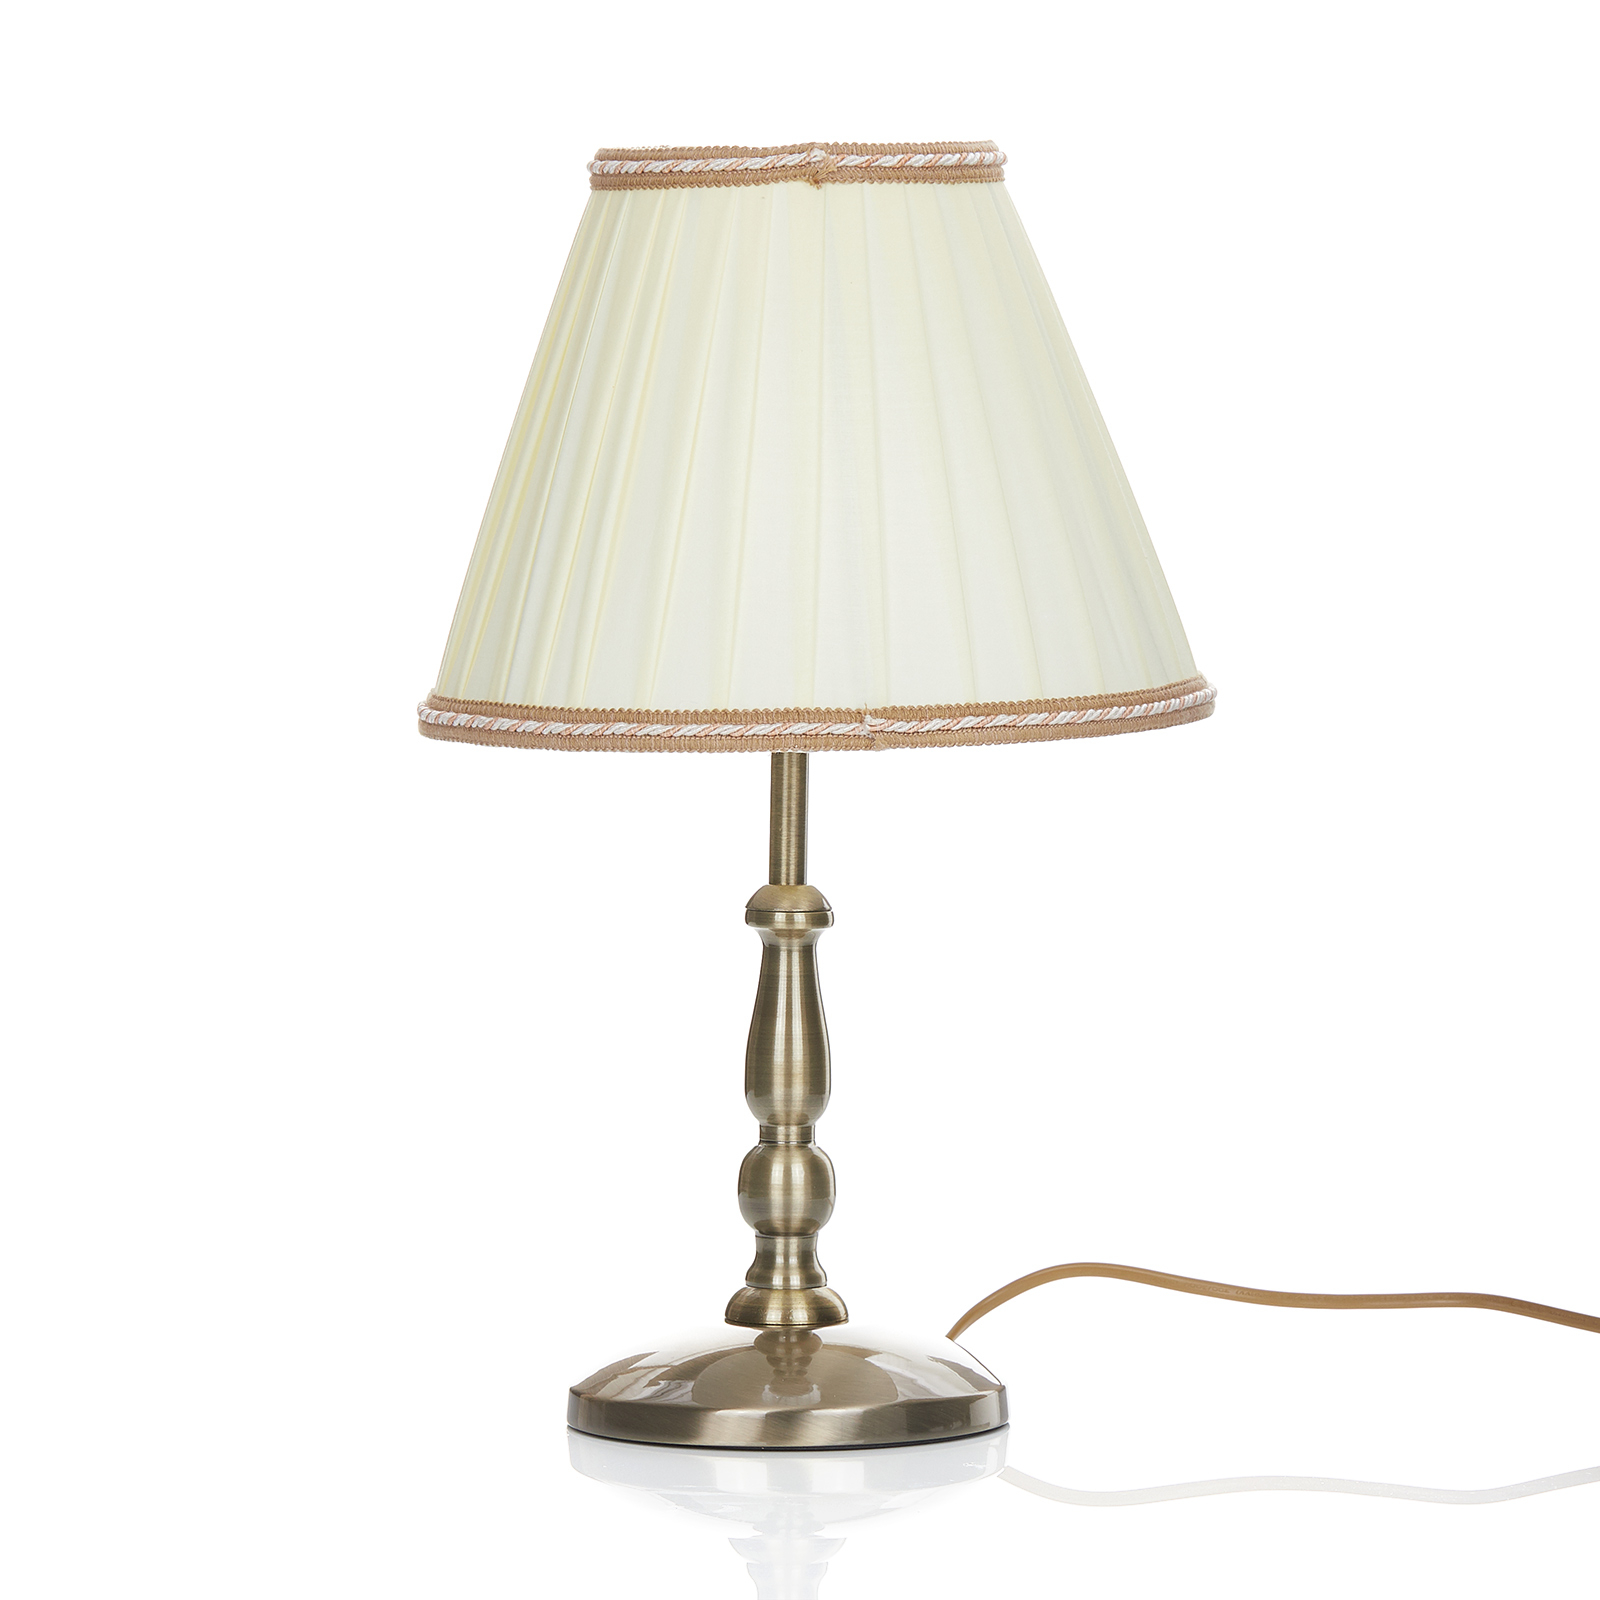 Rosella table lamp 40 cm high